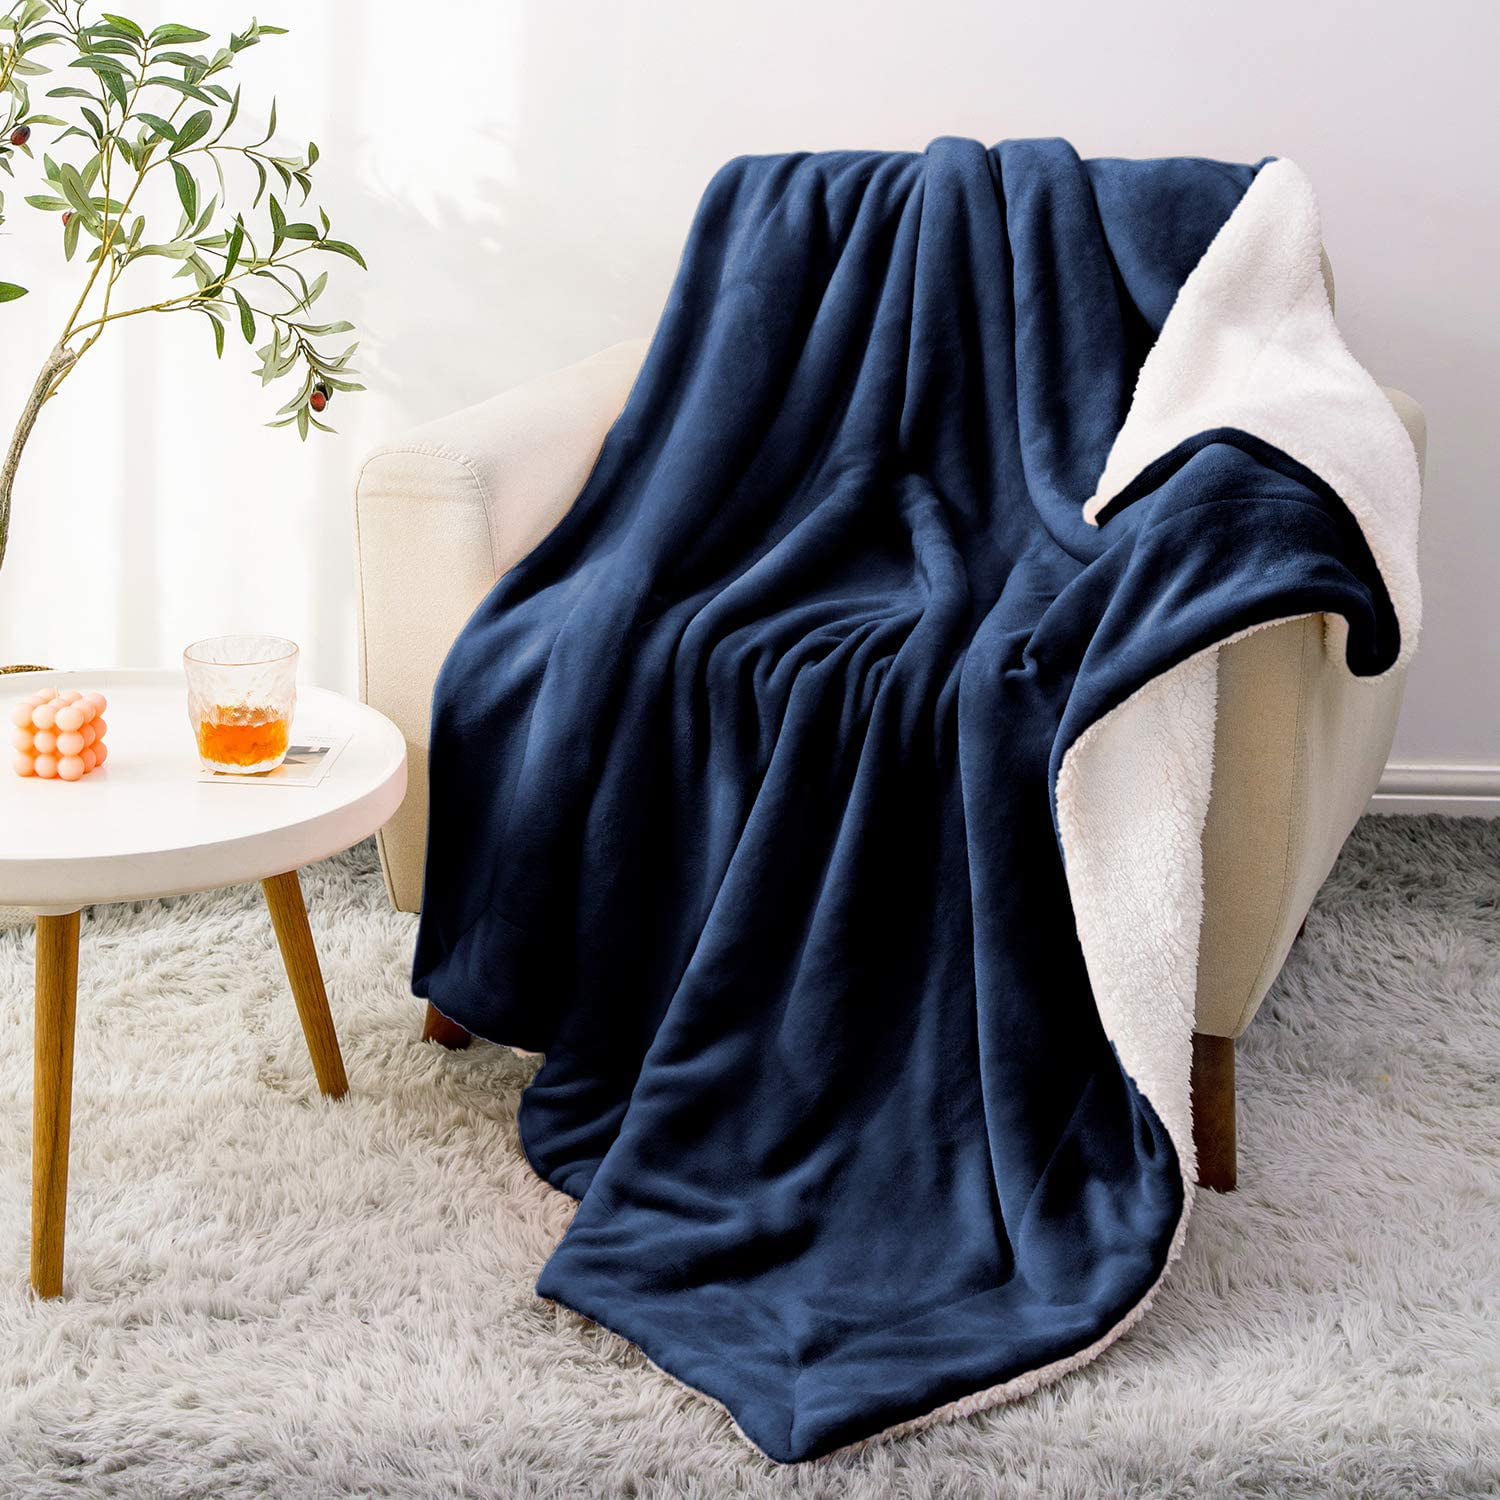 StangH Velvet Curtains & Flannel Fleece Blanket Twin Size 